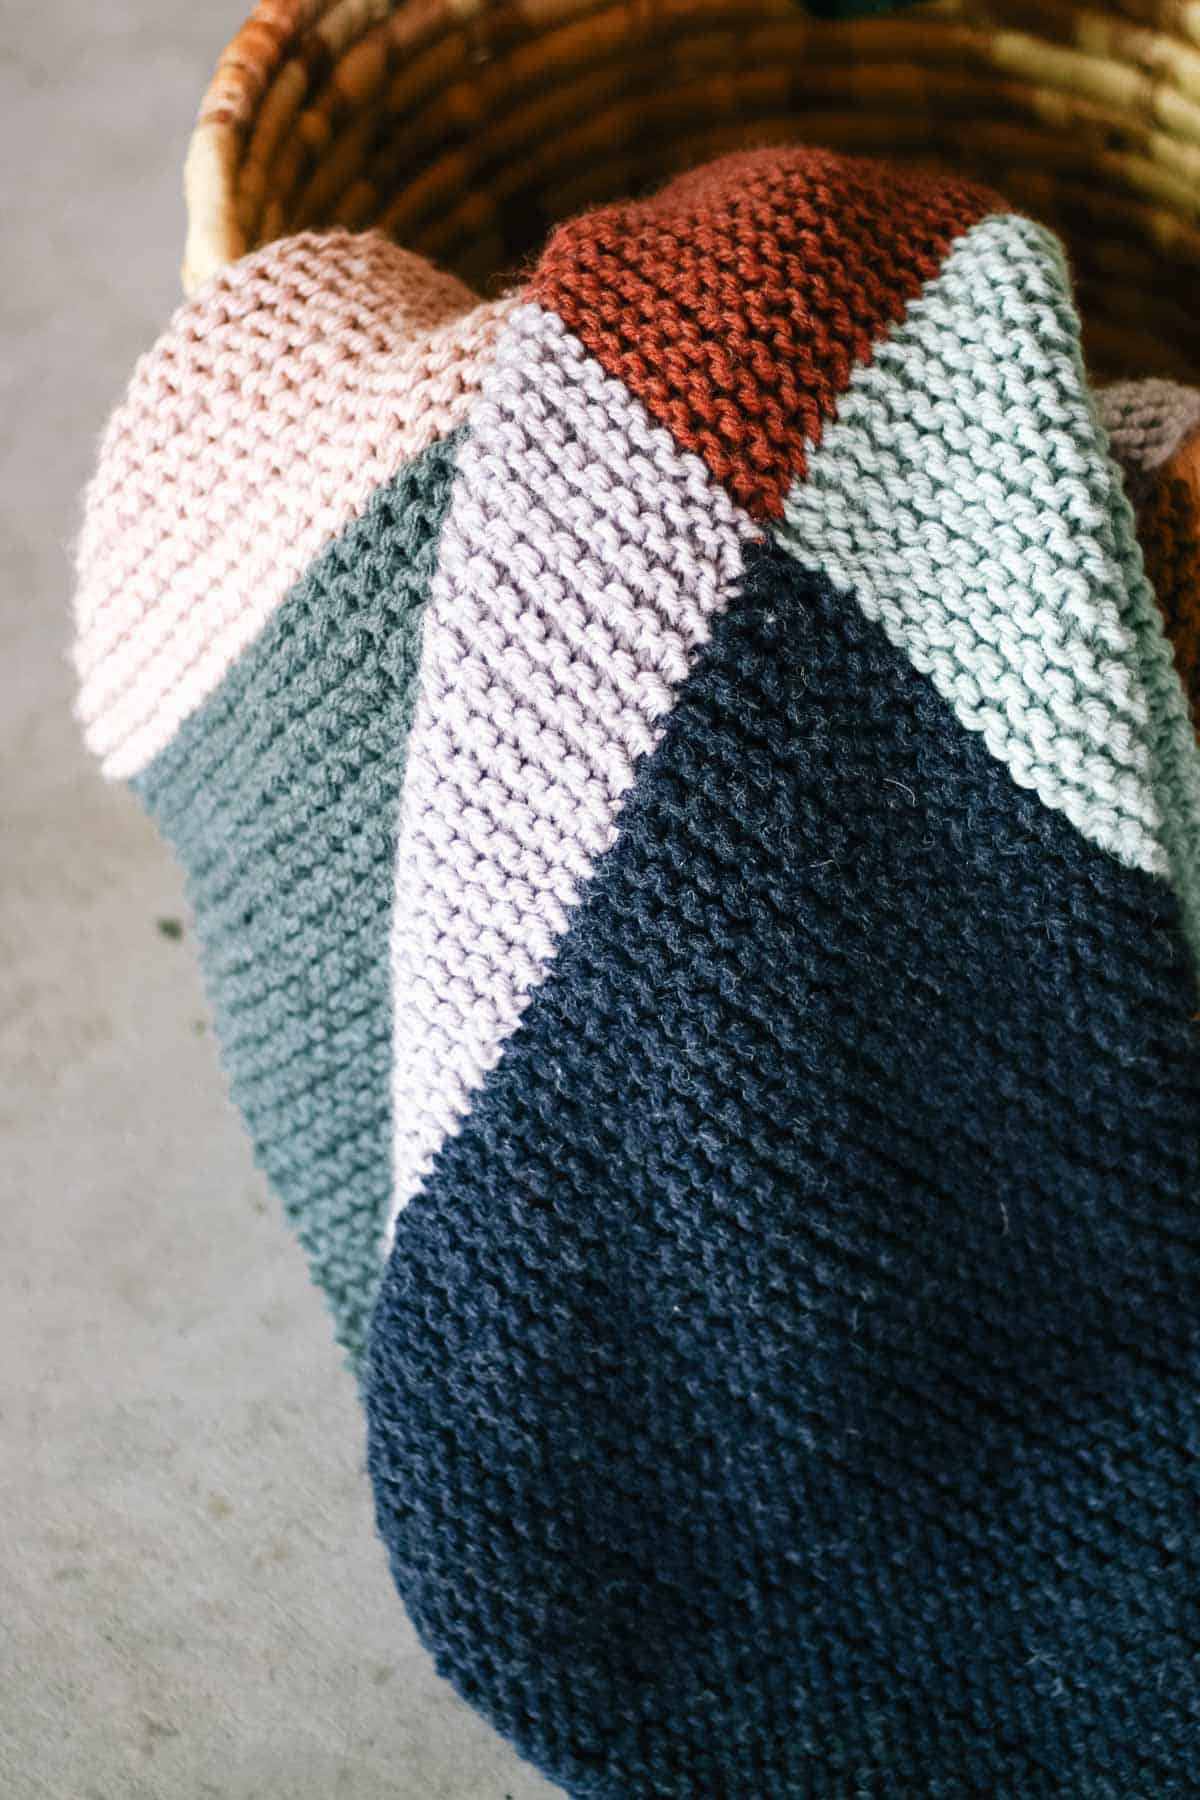 Garter stitch knit blanket draped in a basket.